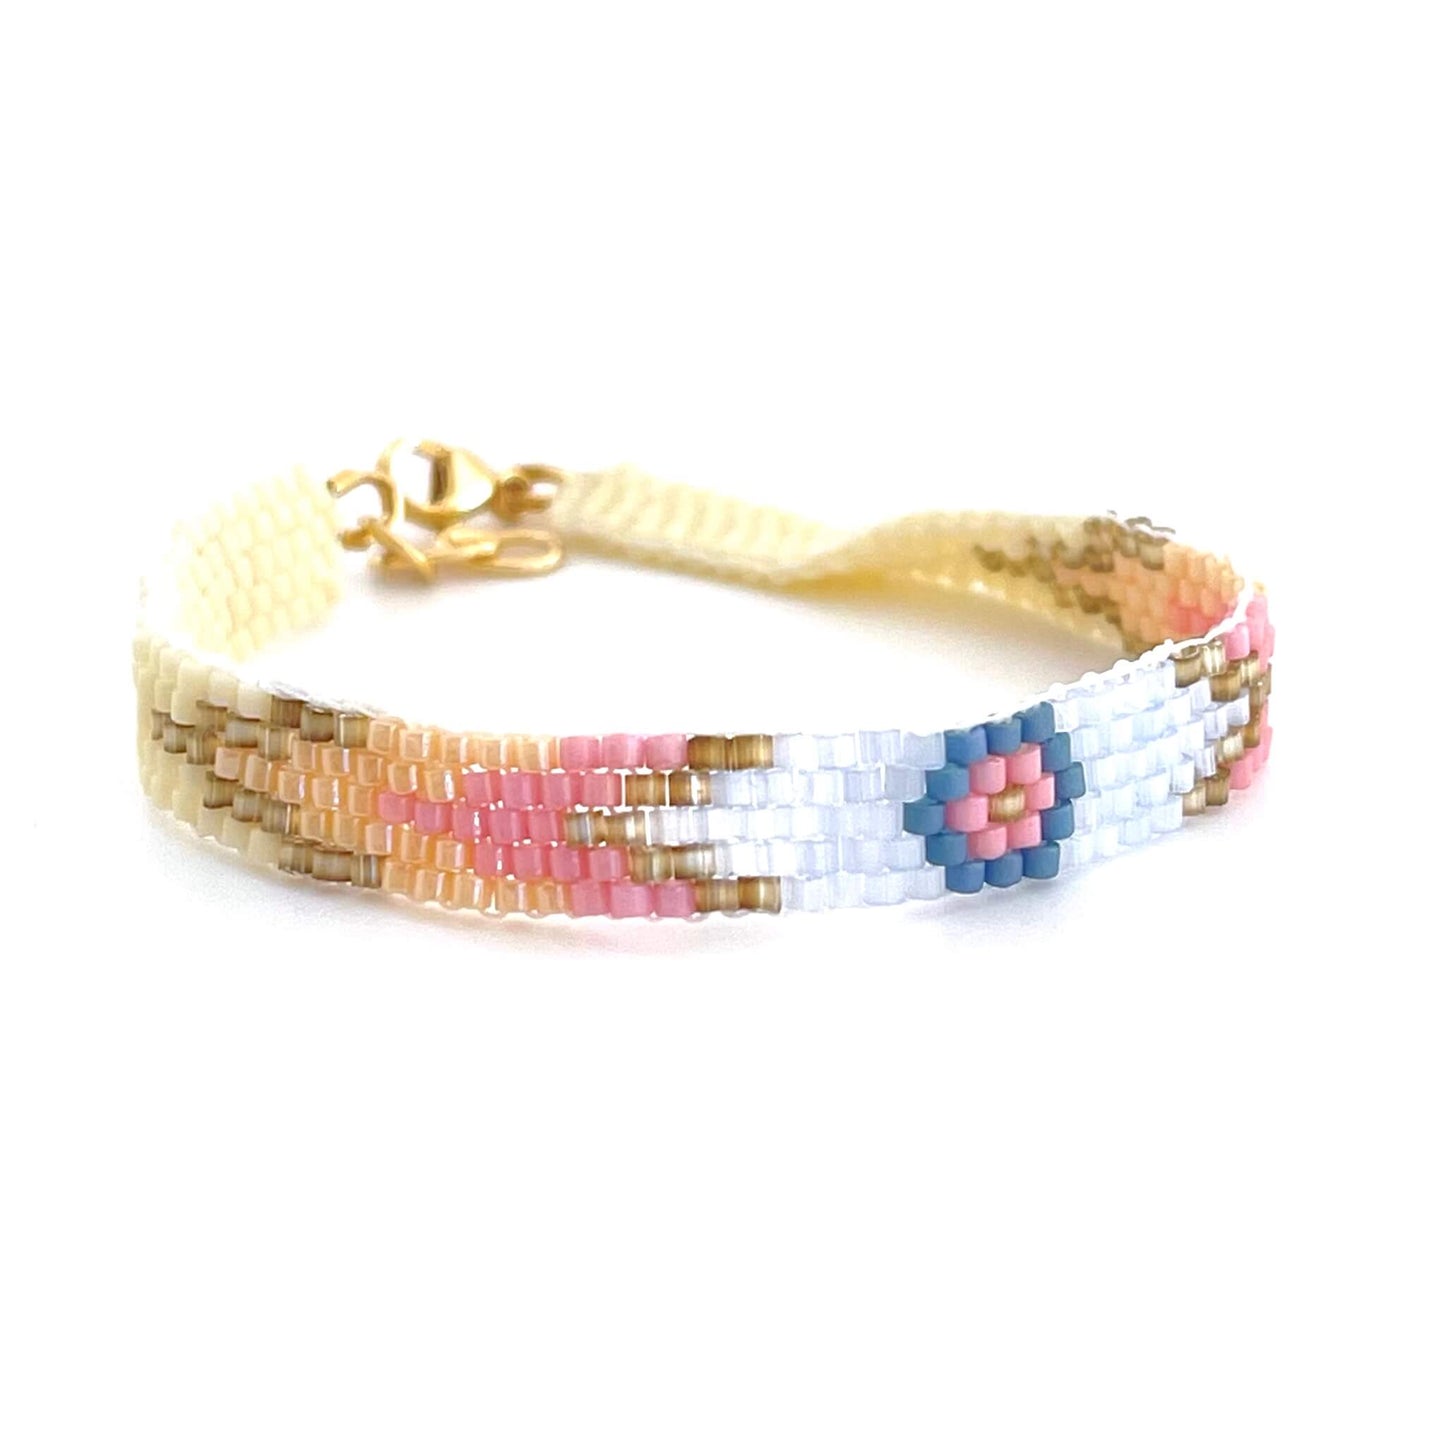 Light blue bracelet with pink and peach arrow  pattern. Flat beaded bracelet handmade in NYC using a peyote stitch.